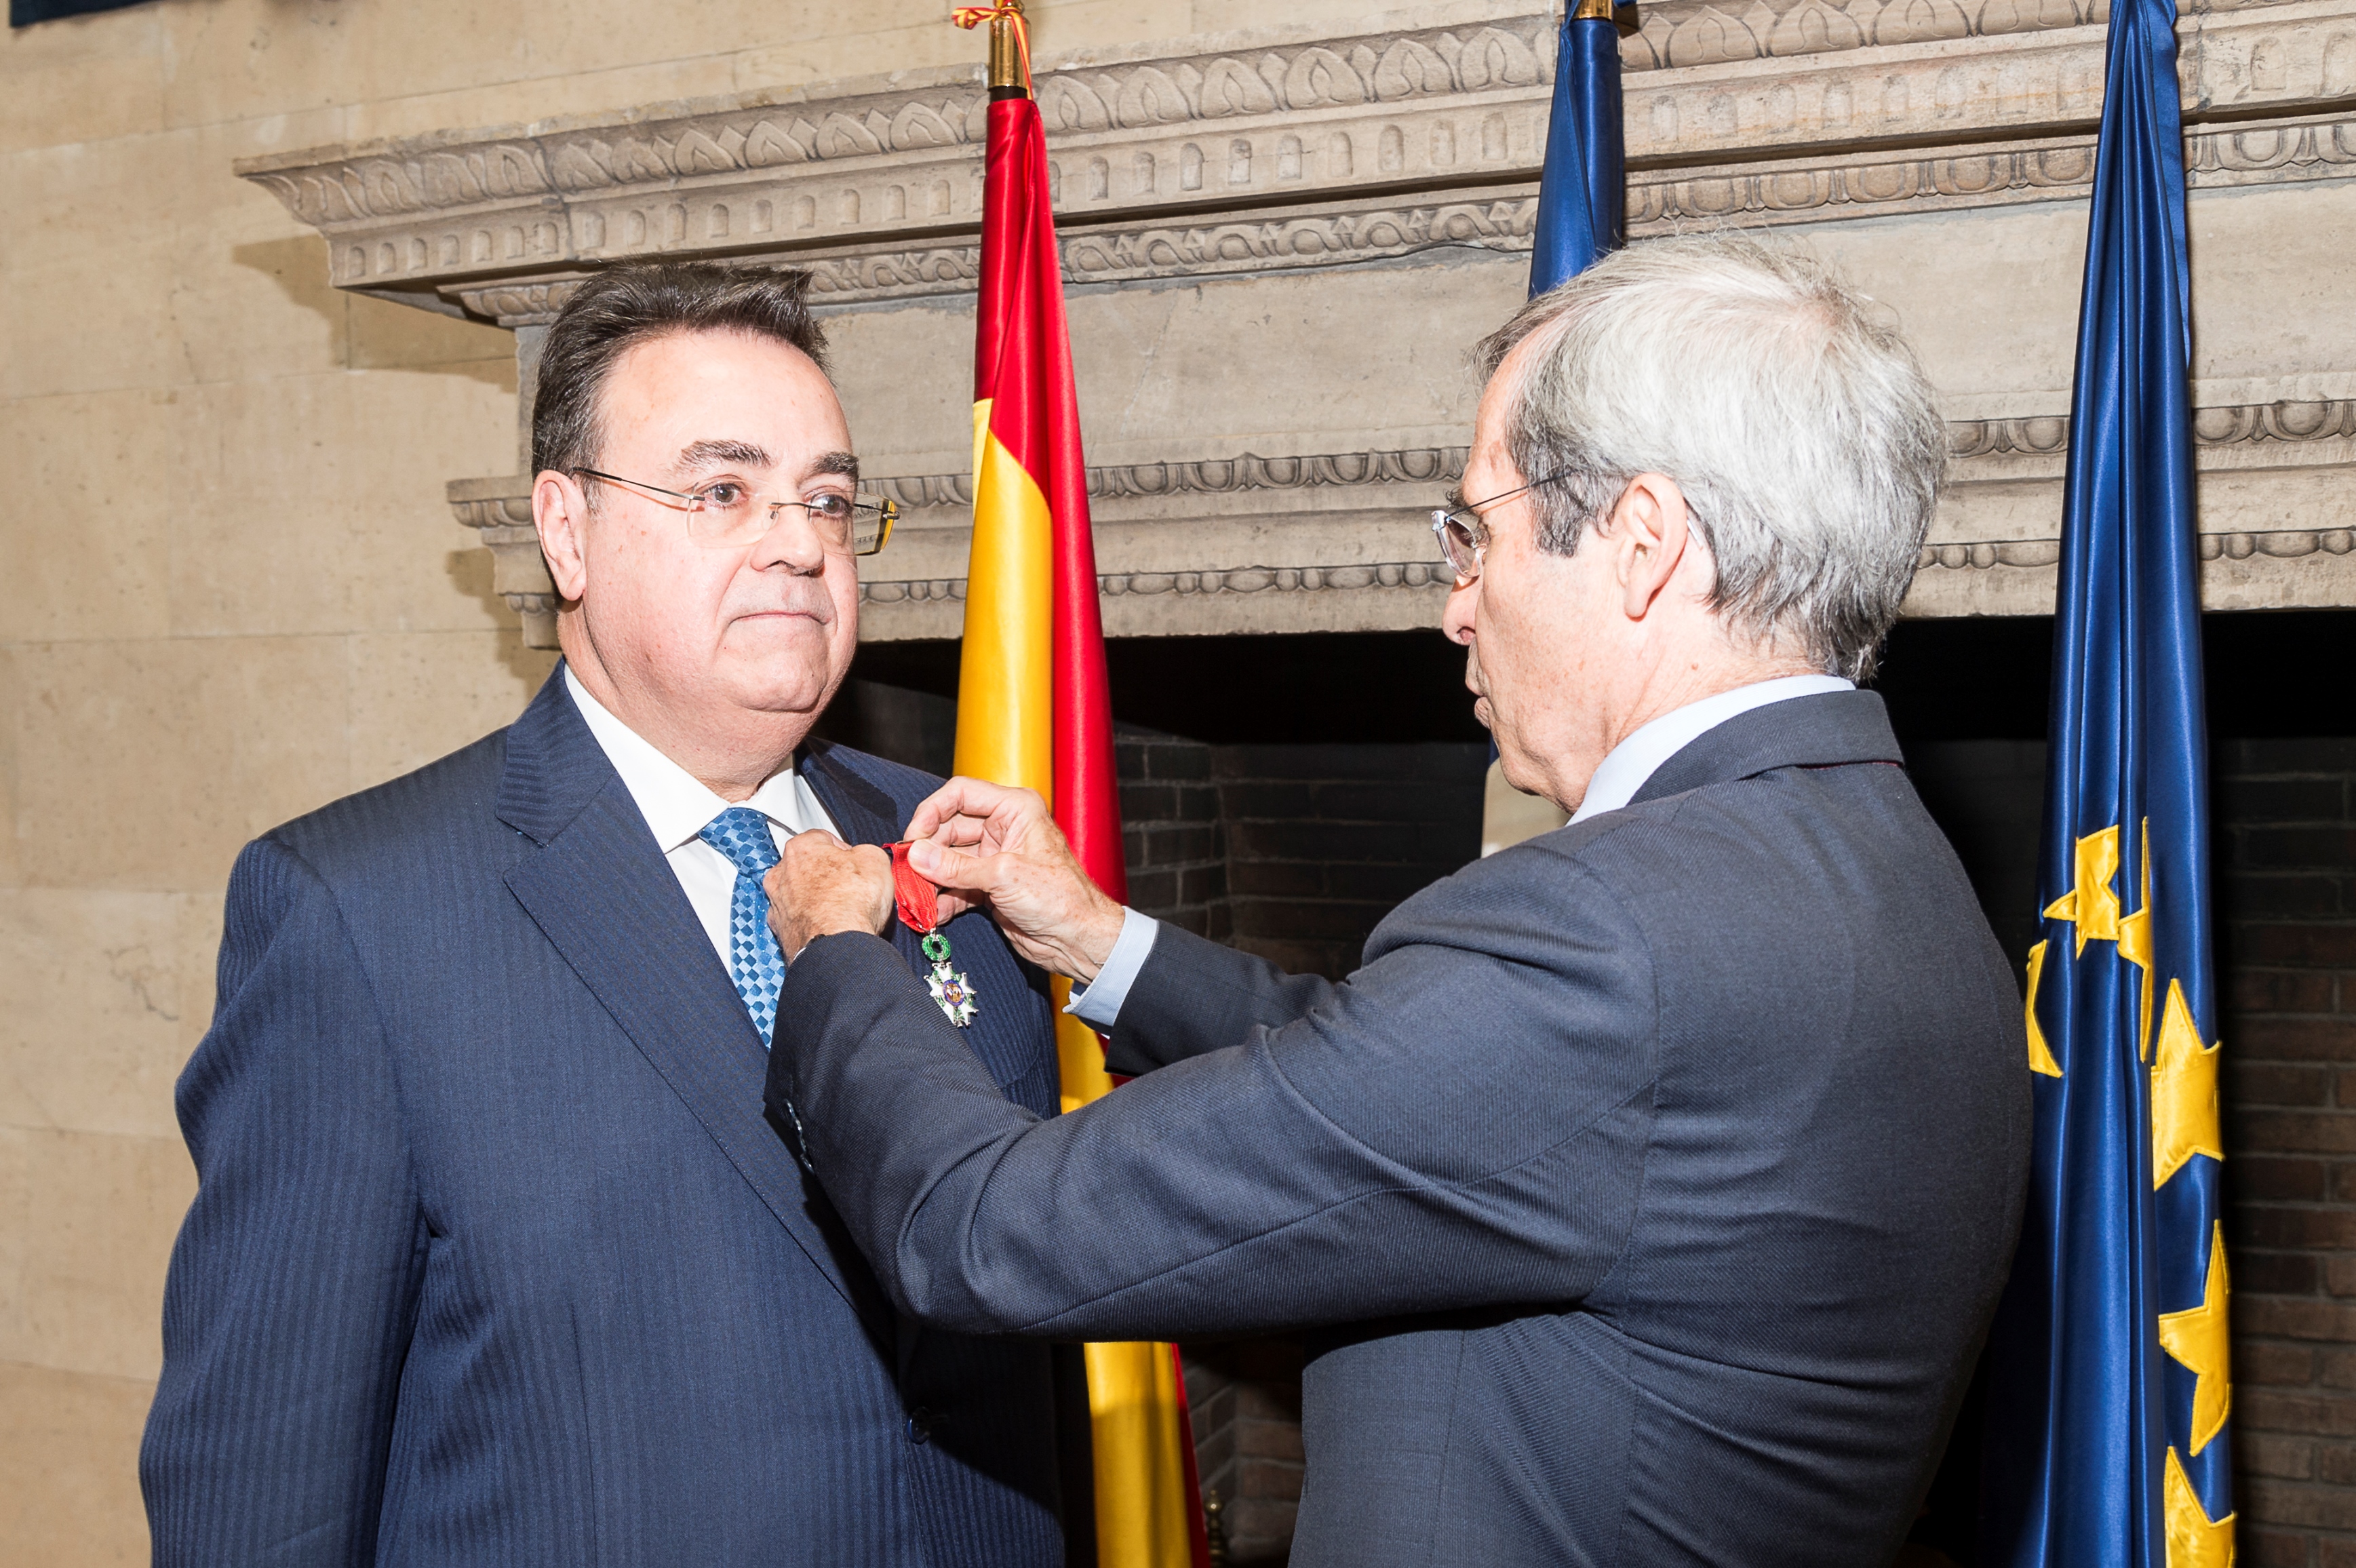 Chairman of Enagás receiving an award